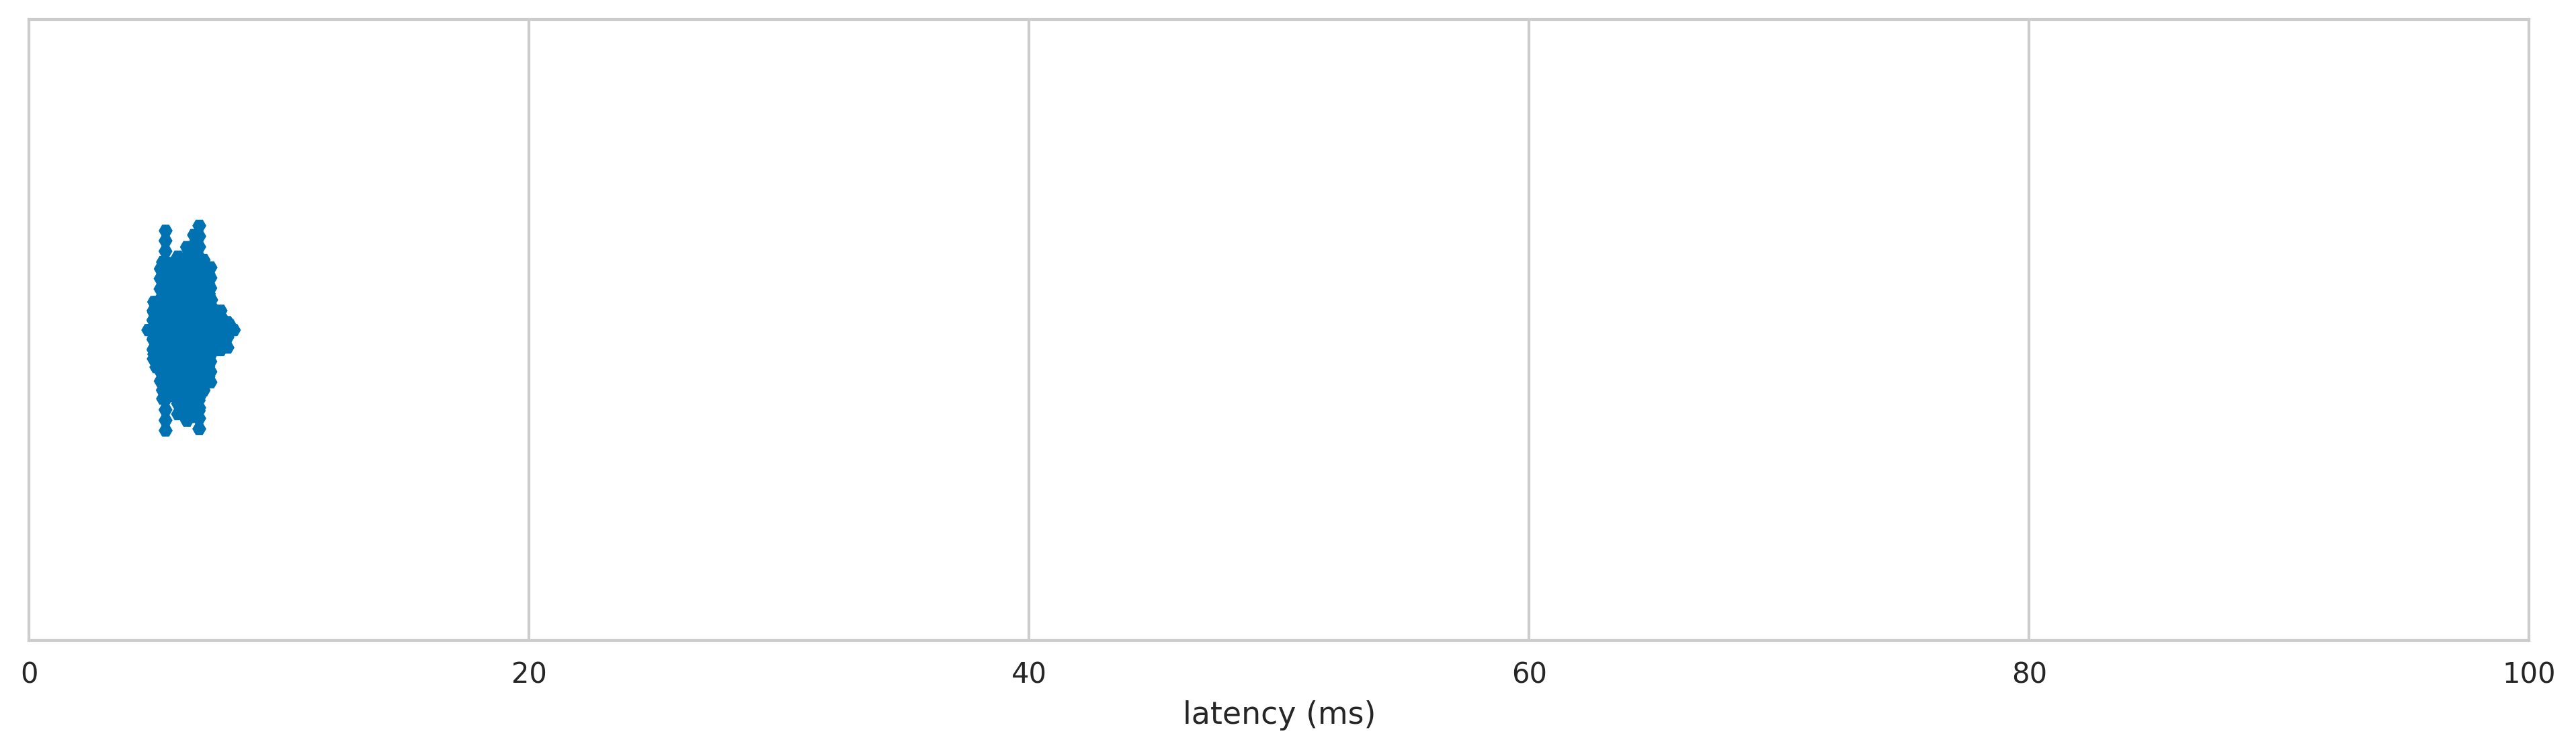 Logitech G700 latency distribution 